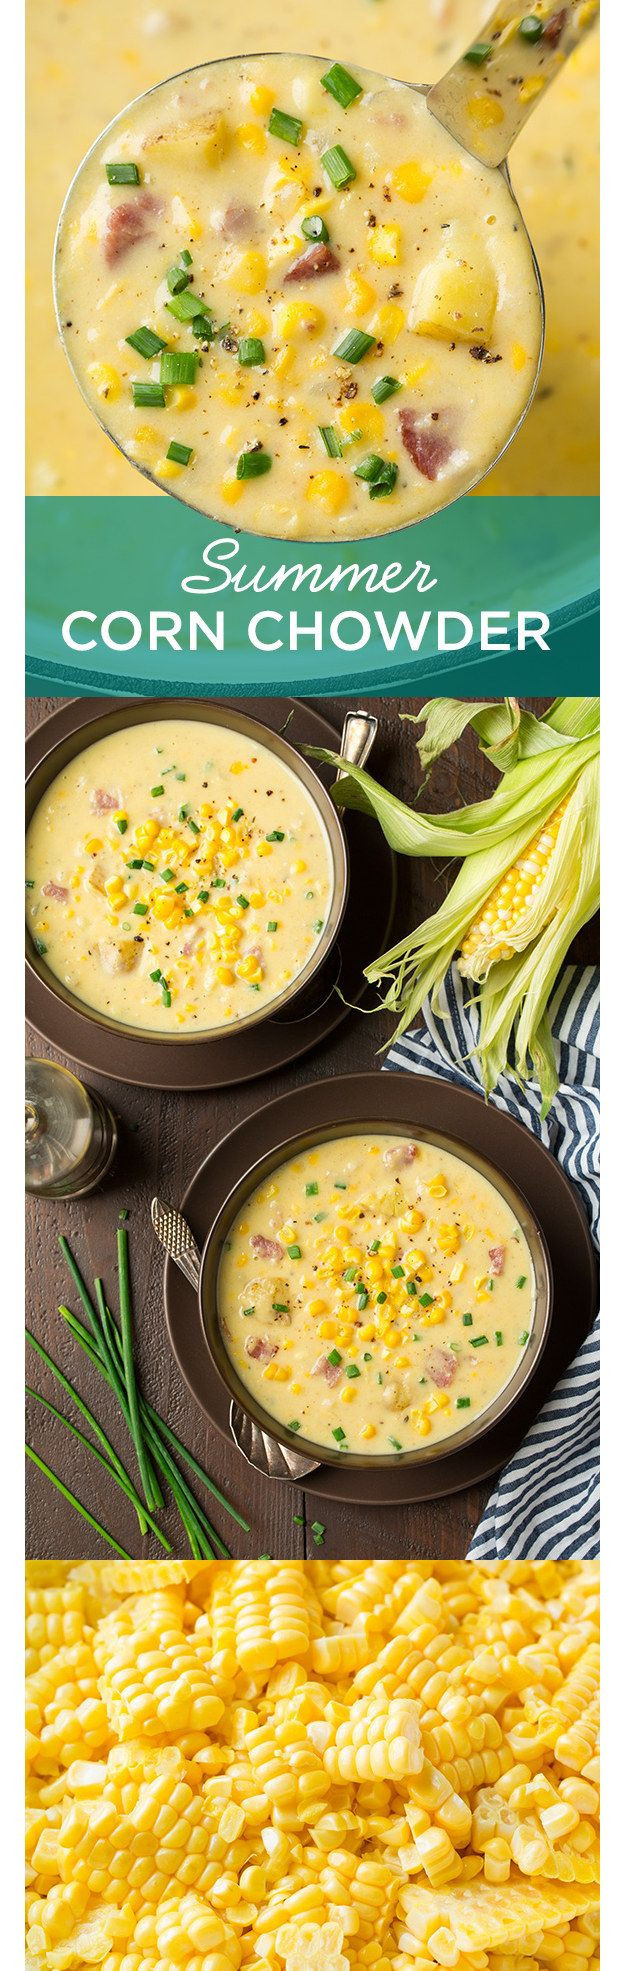 Summer Corn Chowder Recipe
 100 Summer Recipes on Pinterest